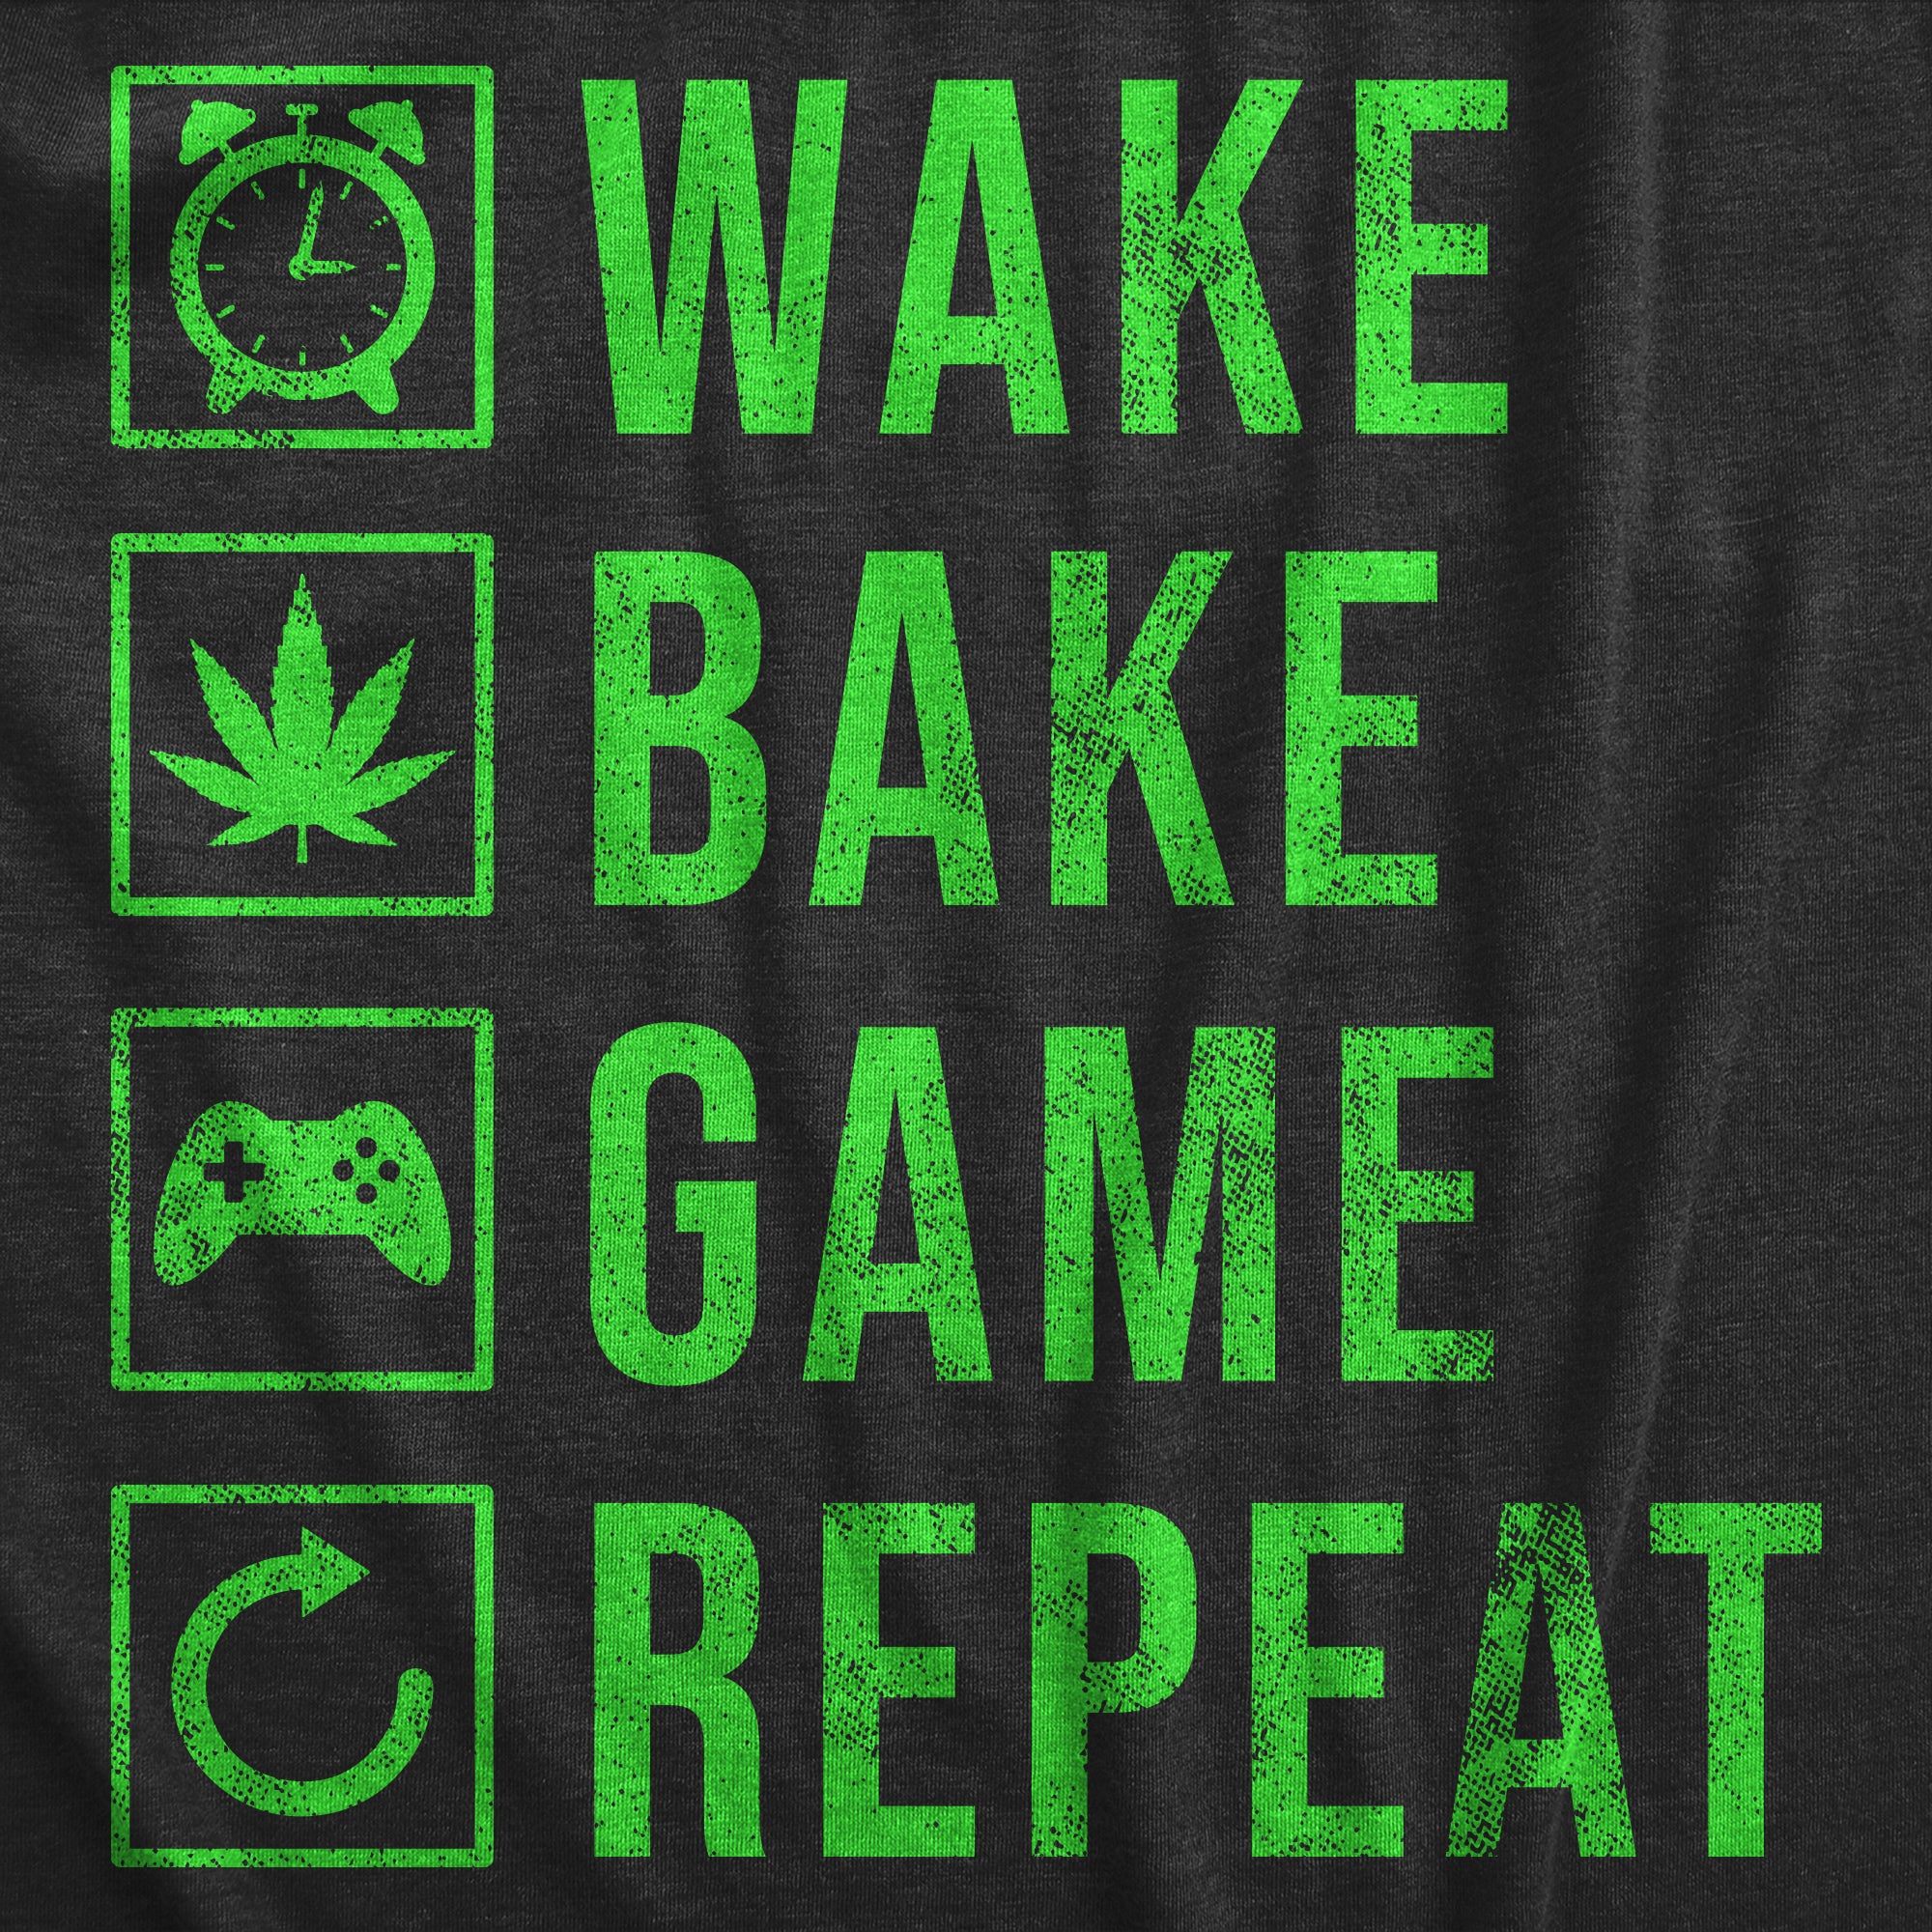 Funny Heather Black - REPEAT Wake Bake Game Repeat Mens T Shirt Nerdy 420 Video Games Tee